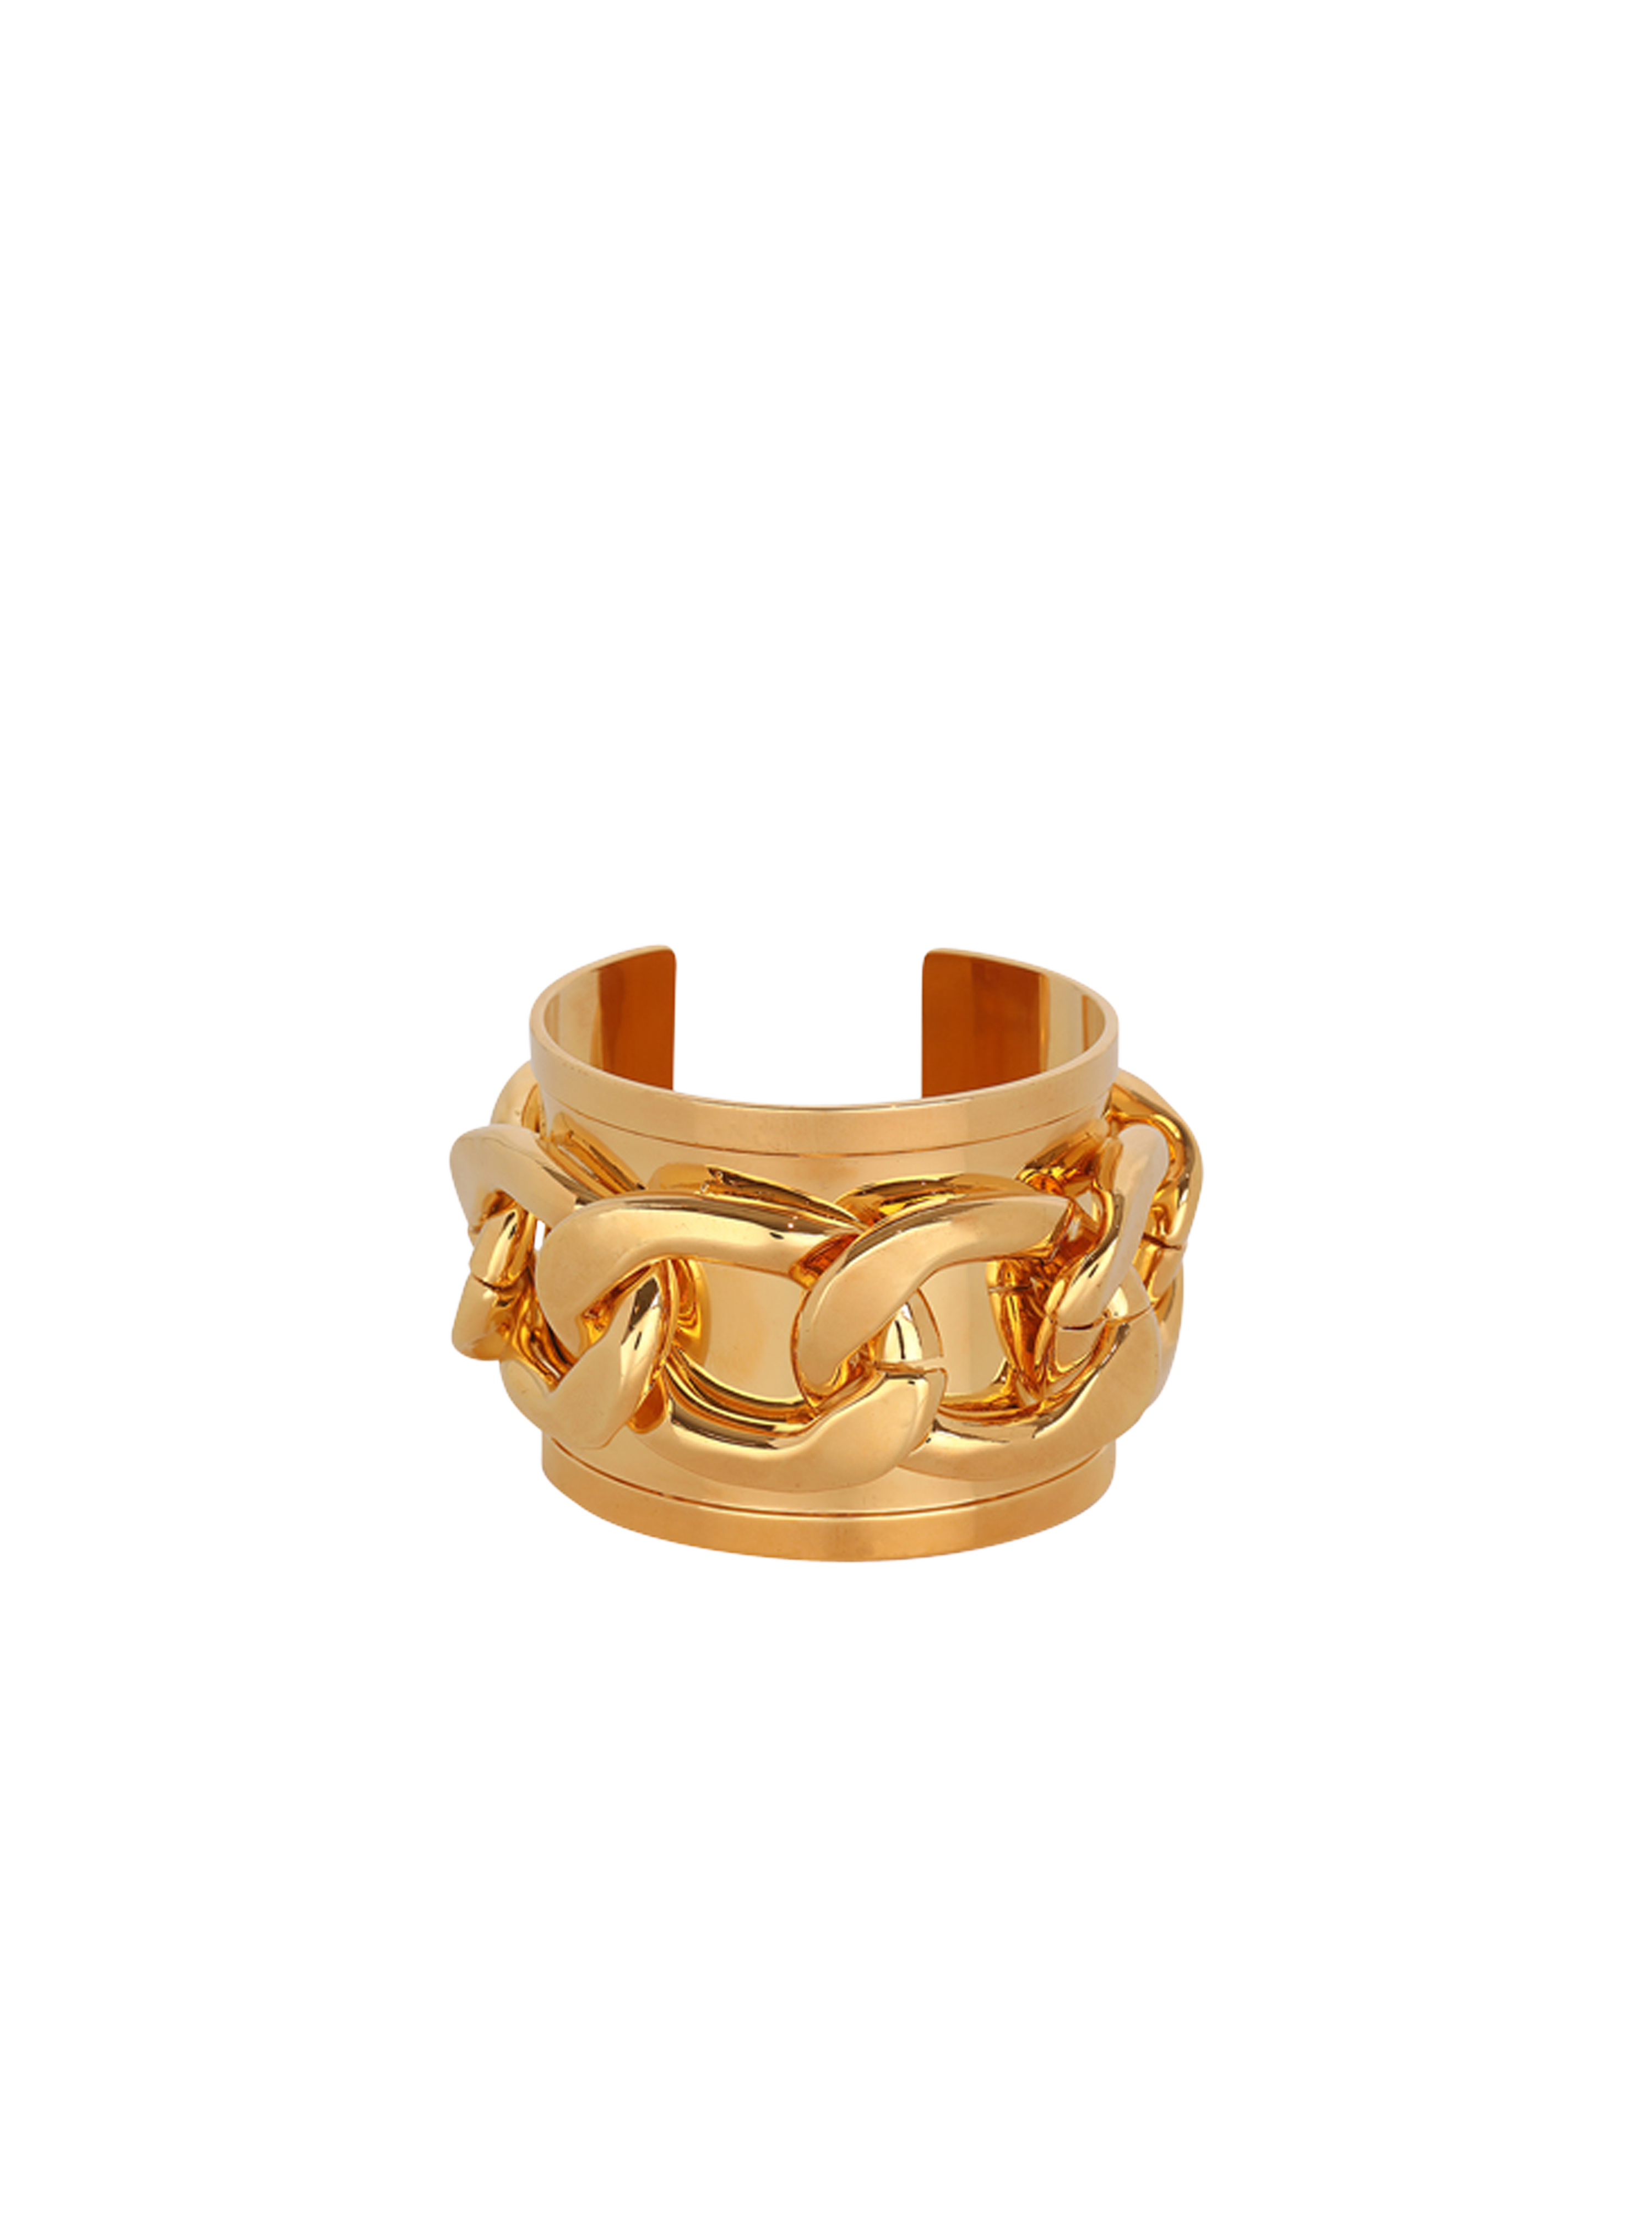 Brass chain cuff bracelet, gold